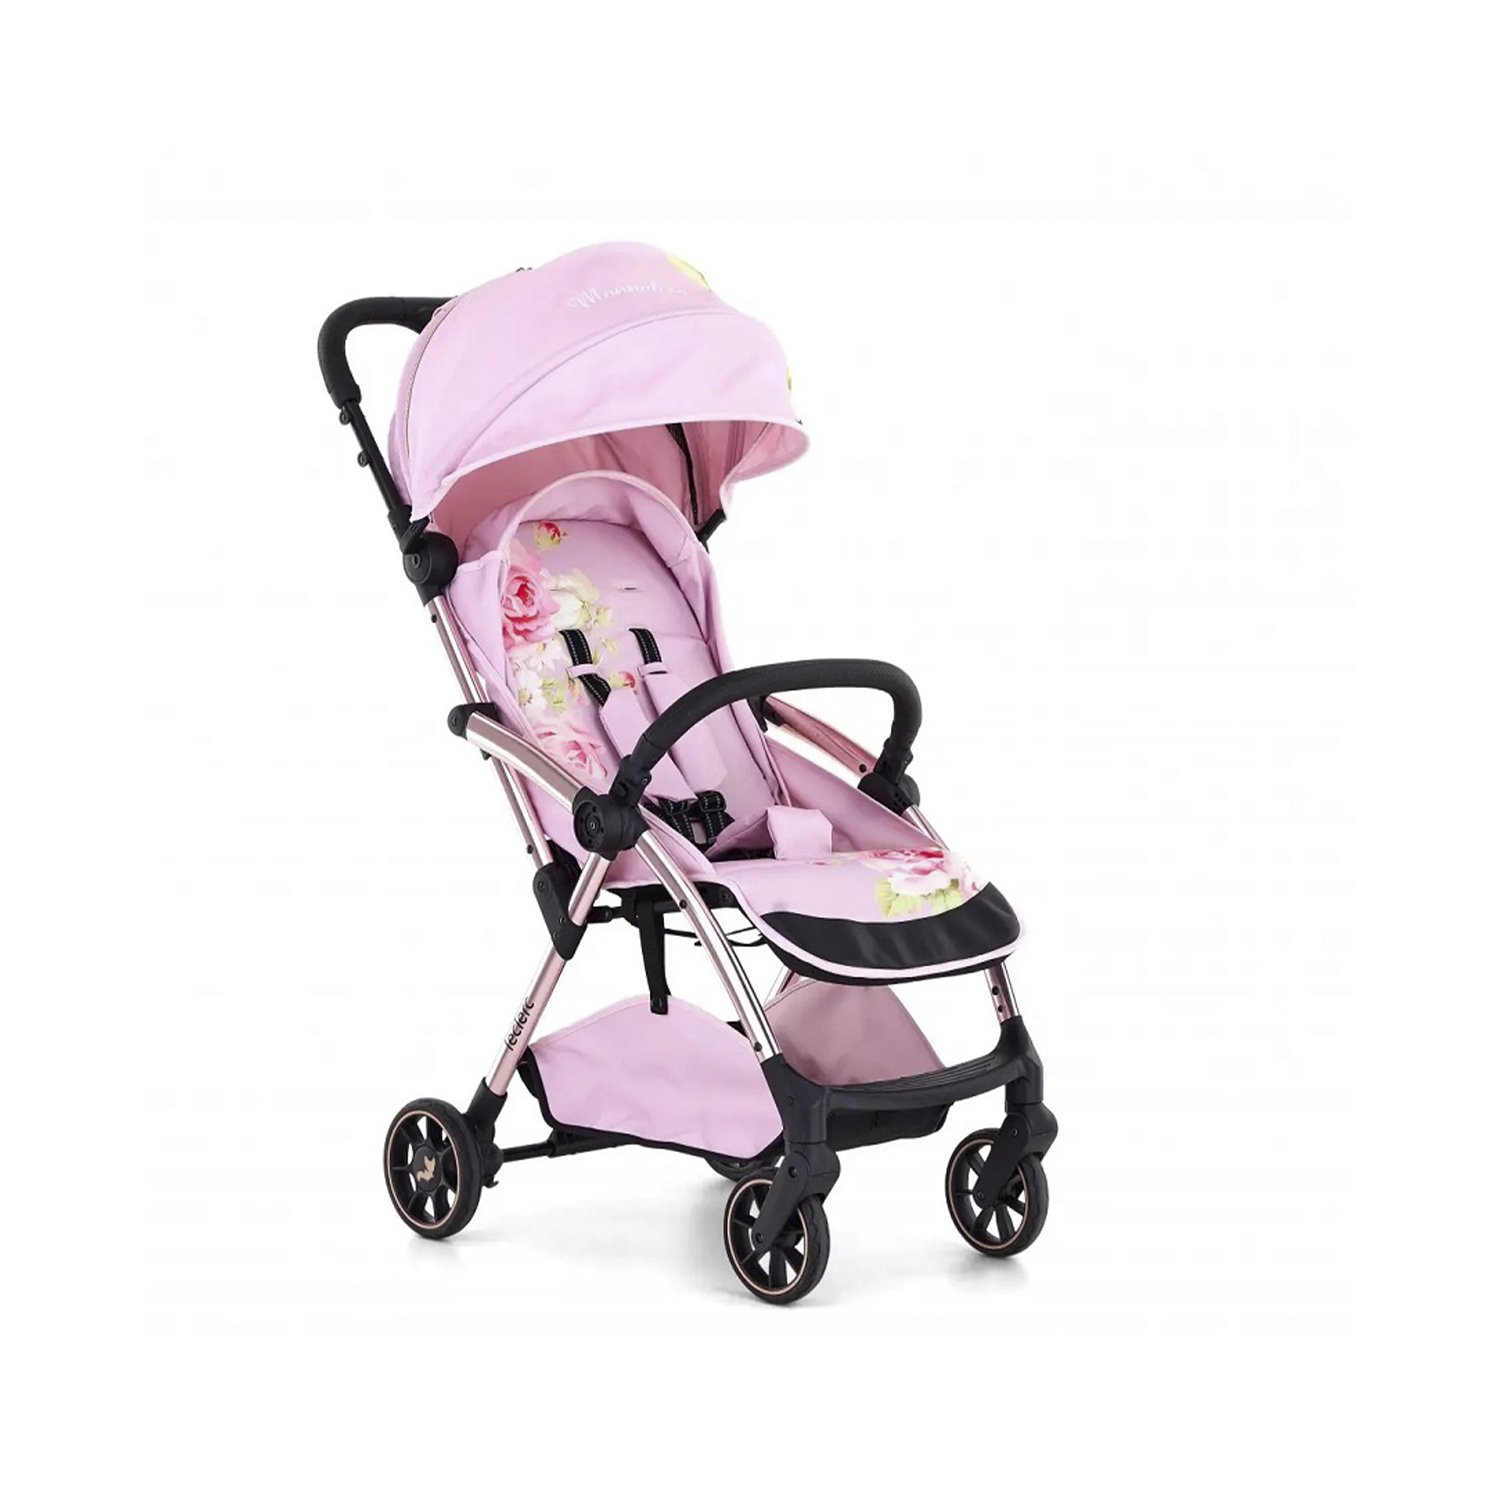 Прогулочная коляска Leclerc Baby + конверт прогулочная коляска monnalisa birch сумка для коляски leclerc baby